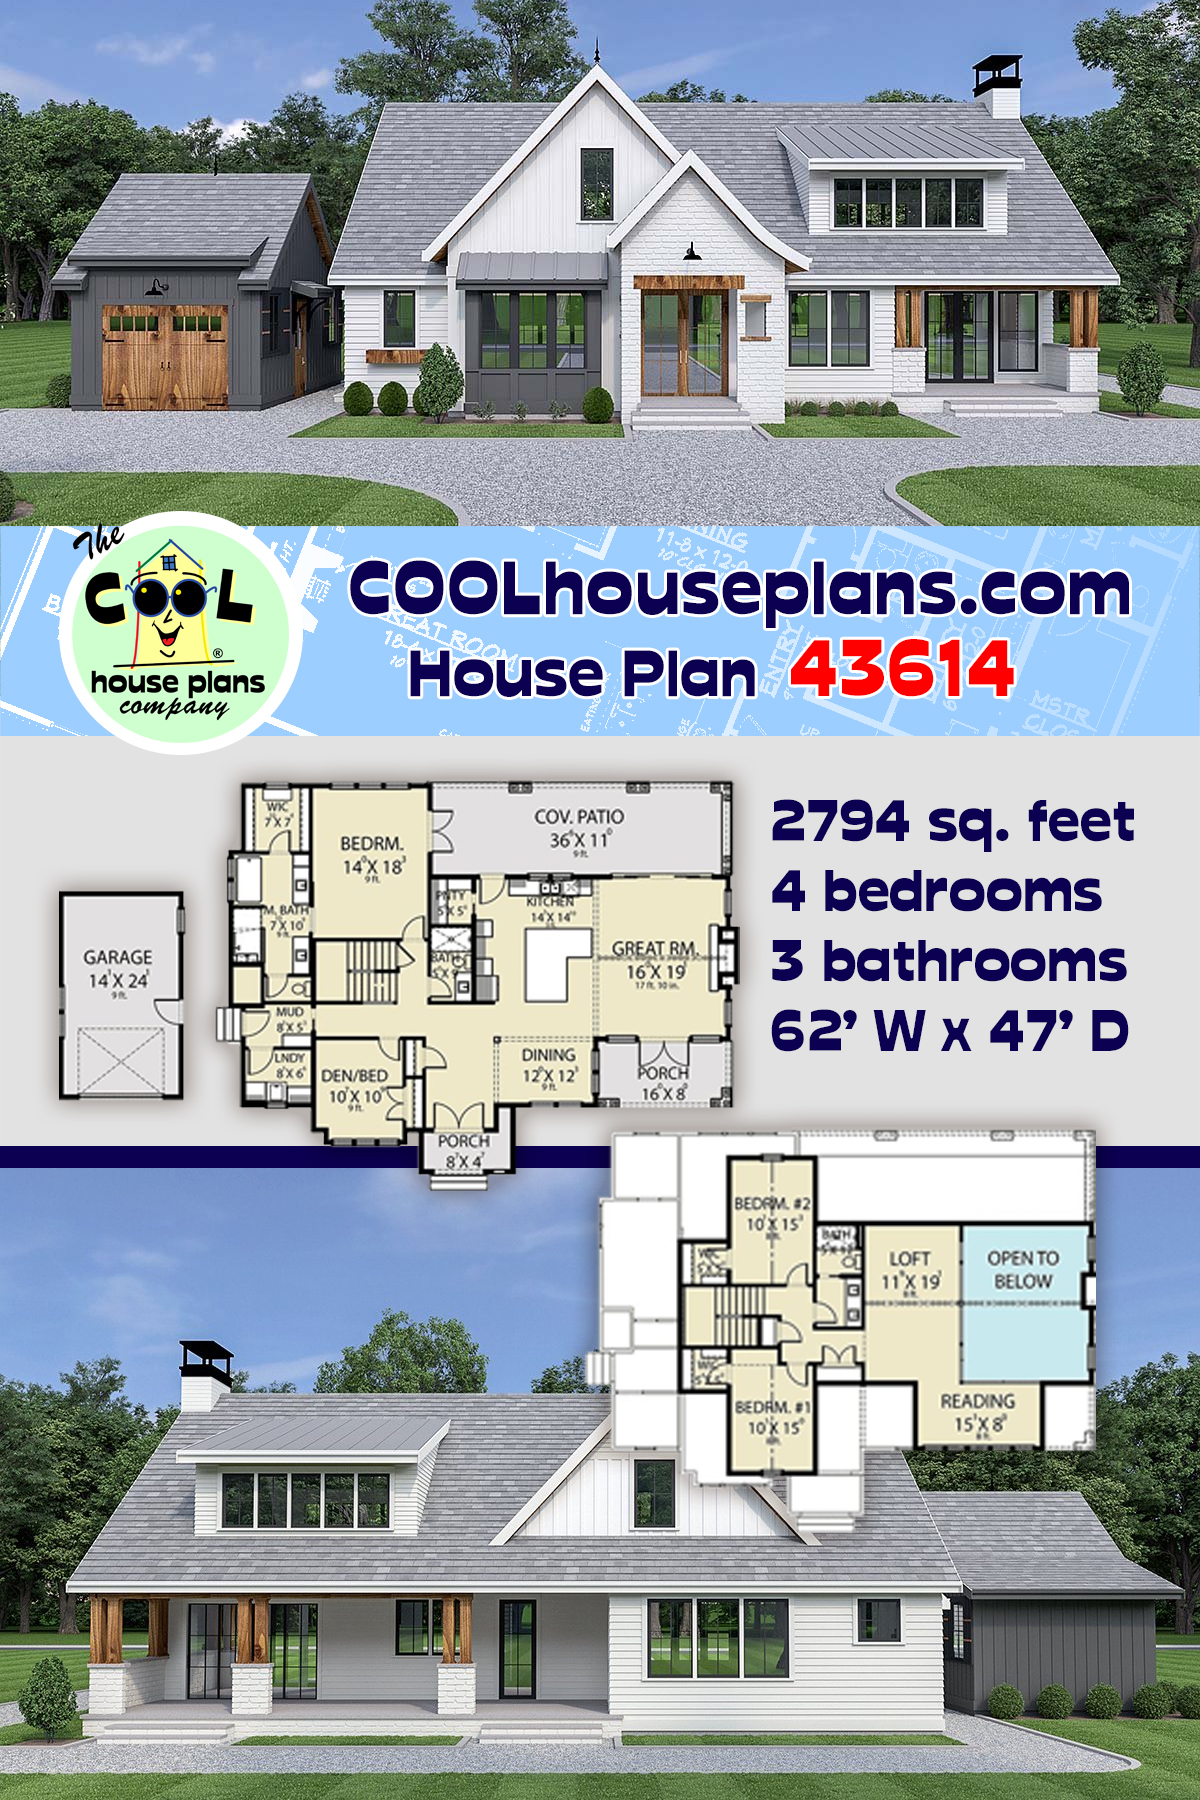 Cottage, Farmhouse House Plan 43614 with 4 Beds, 3 Baths, 1 Car Garage